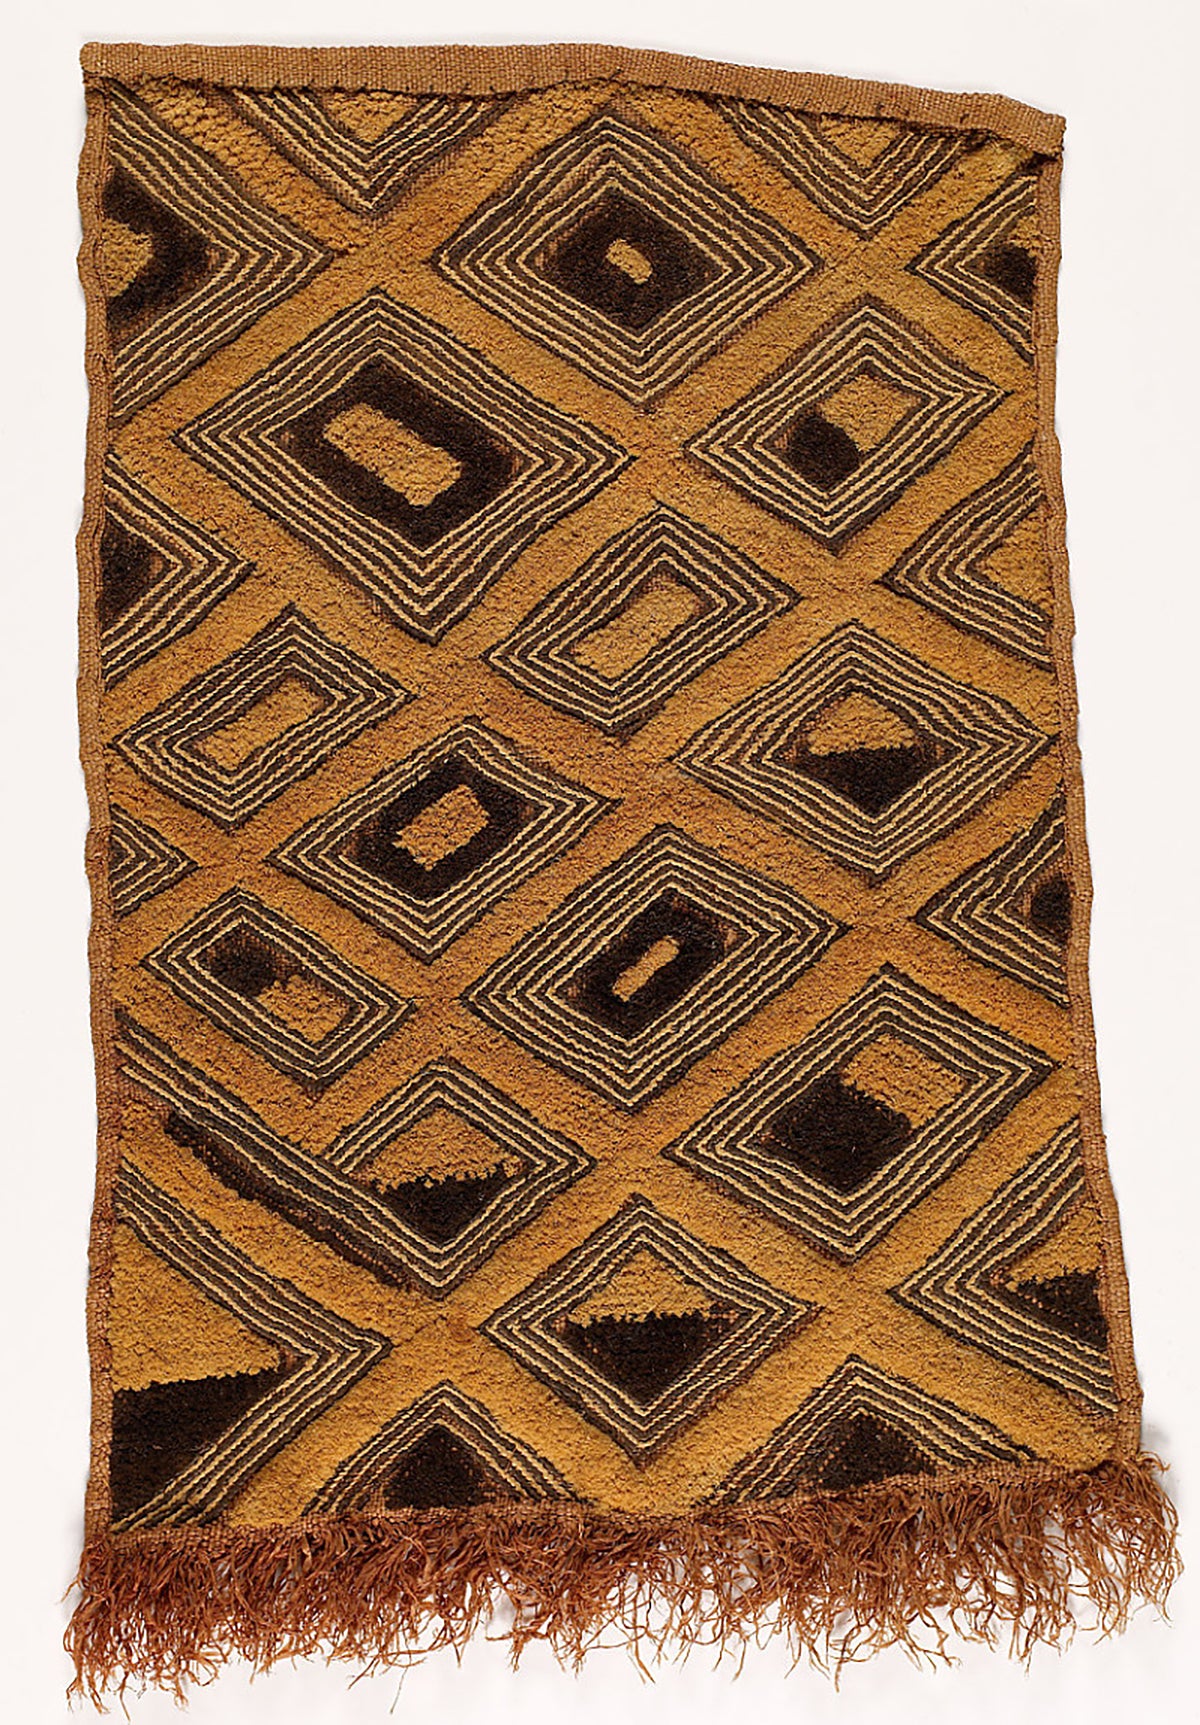 Safari Journal / Blog by Safari Fusion | African textiles / kuba cloth | Vintage Kuba Cloth, Smithsonian Institute